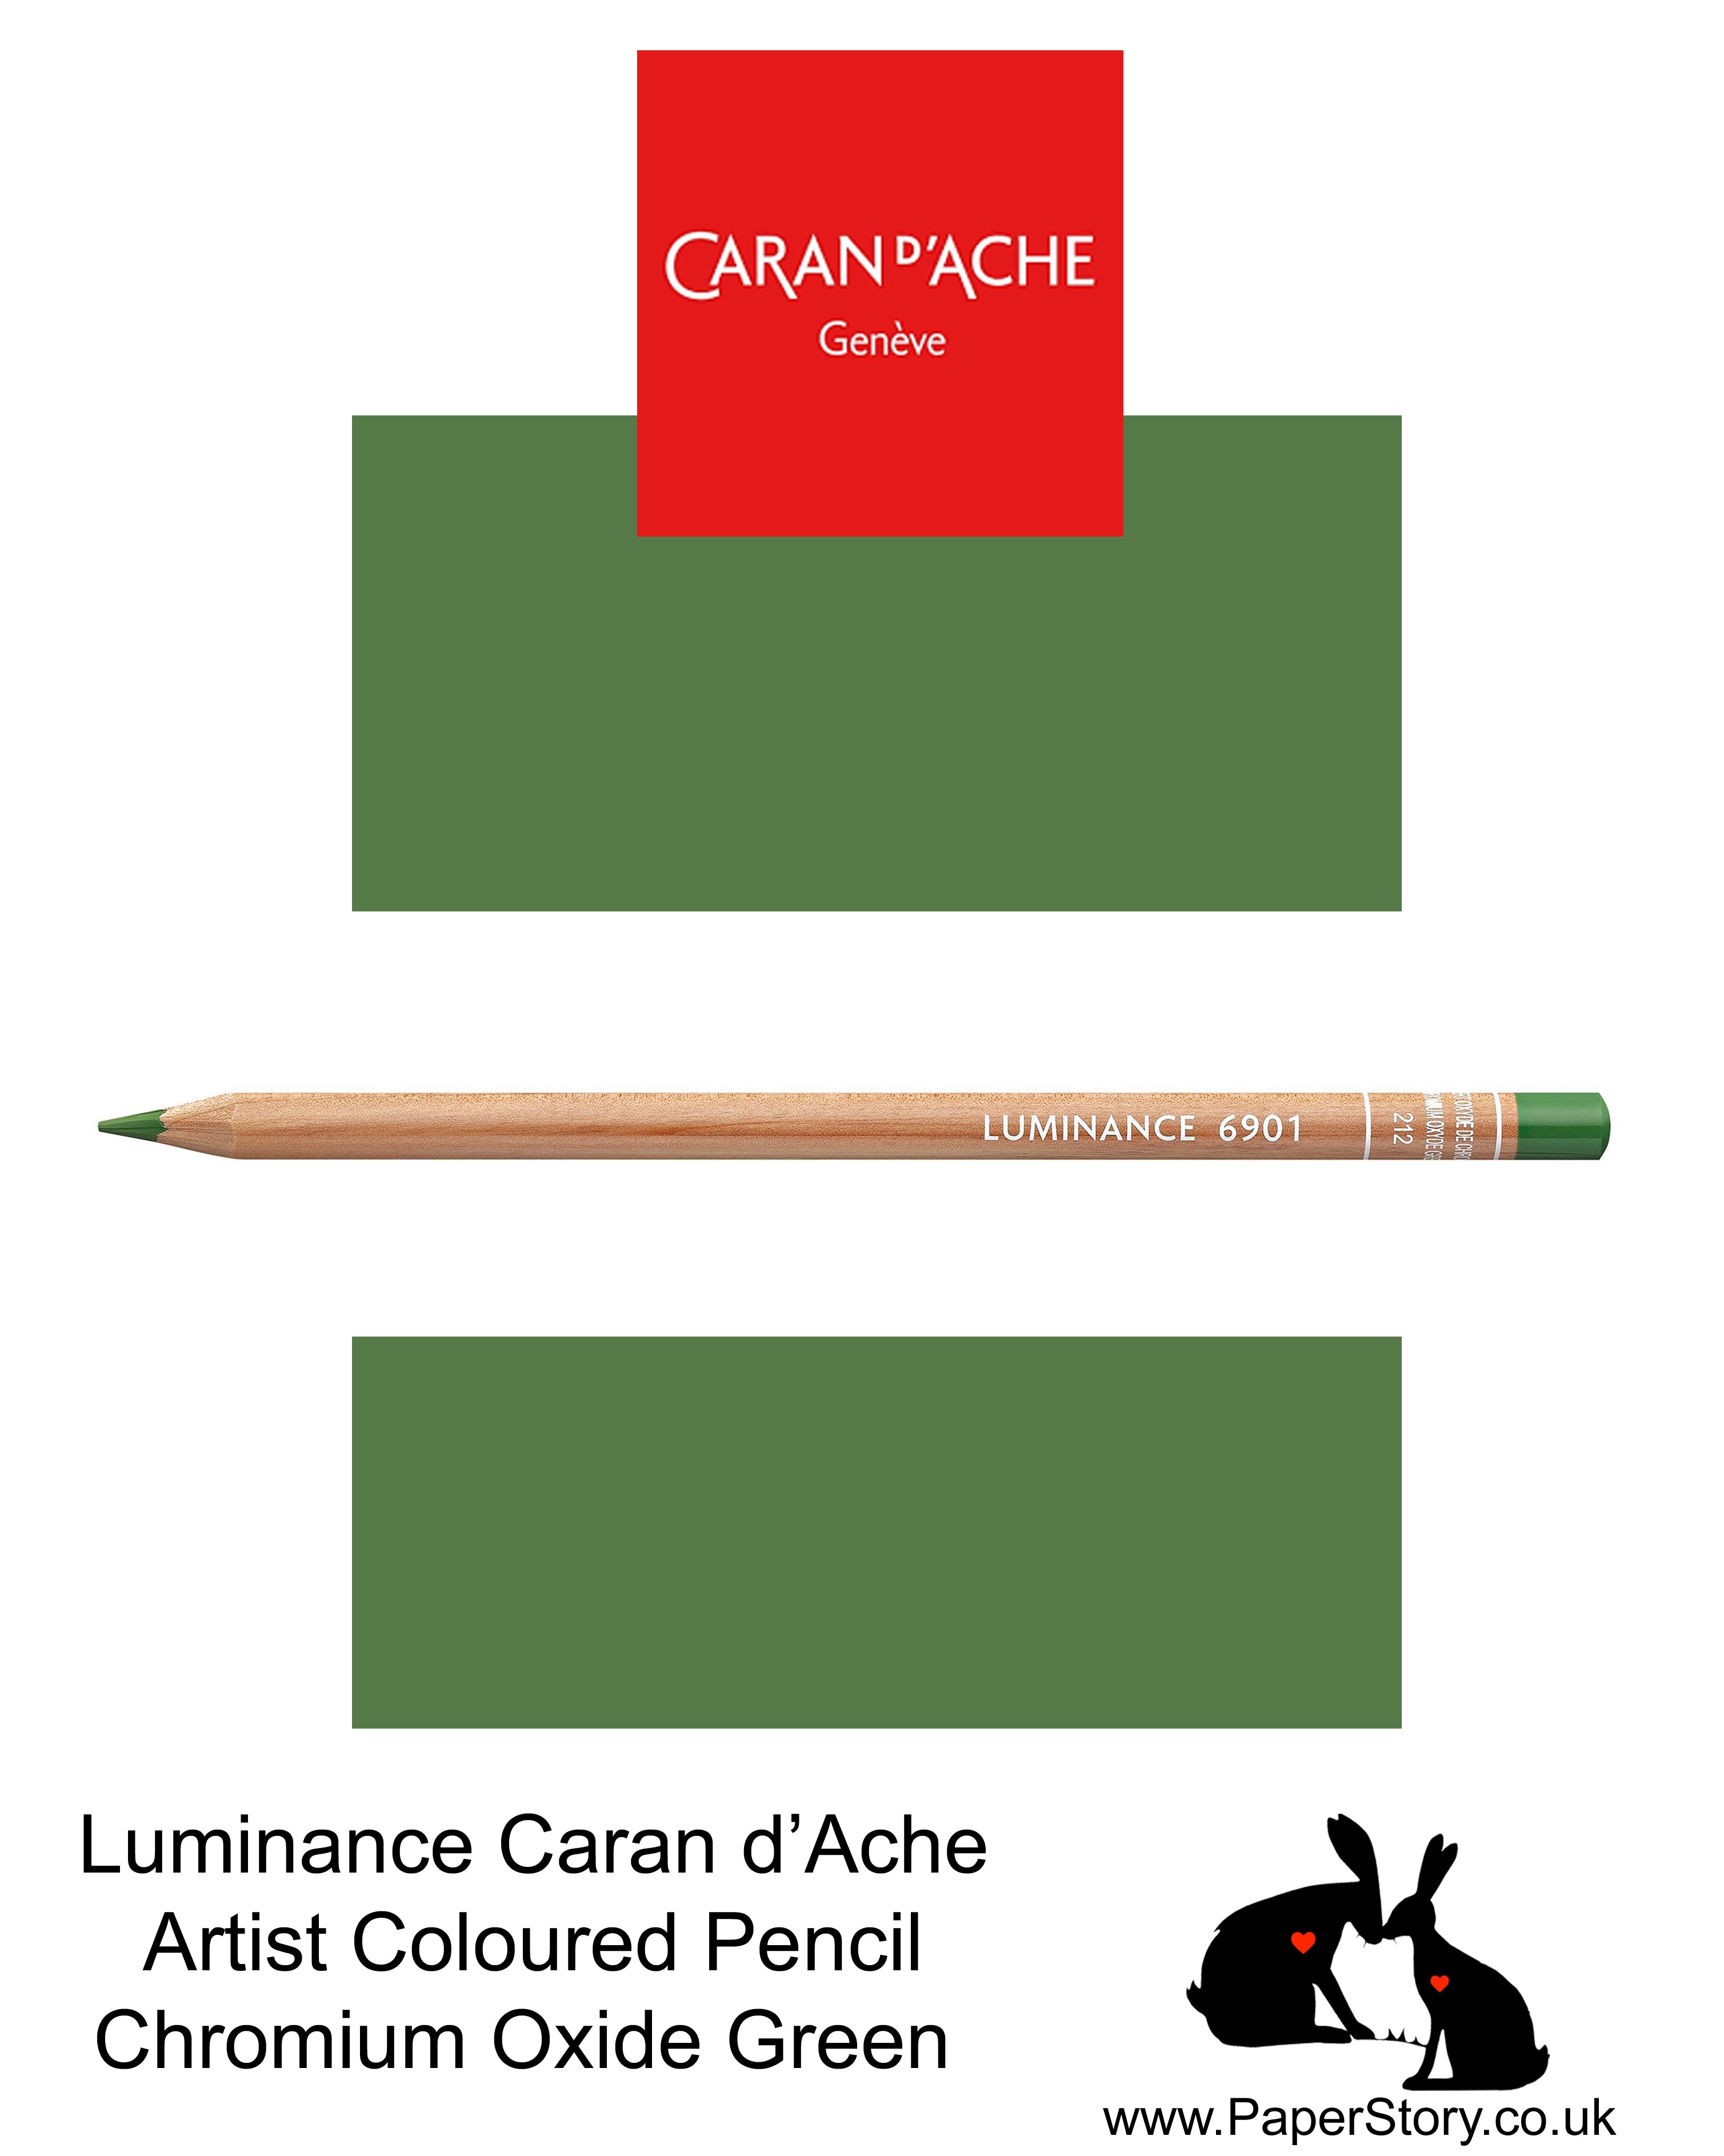 NEW Caran d'Ache Luminance individual Artist Colour Pencils 6901 Chromium Oxide Green 212